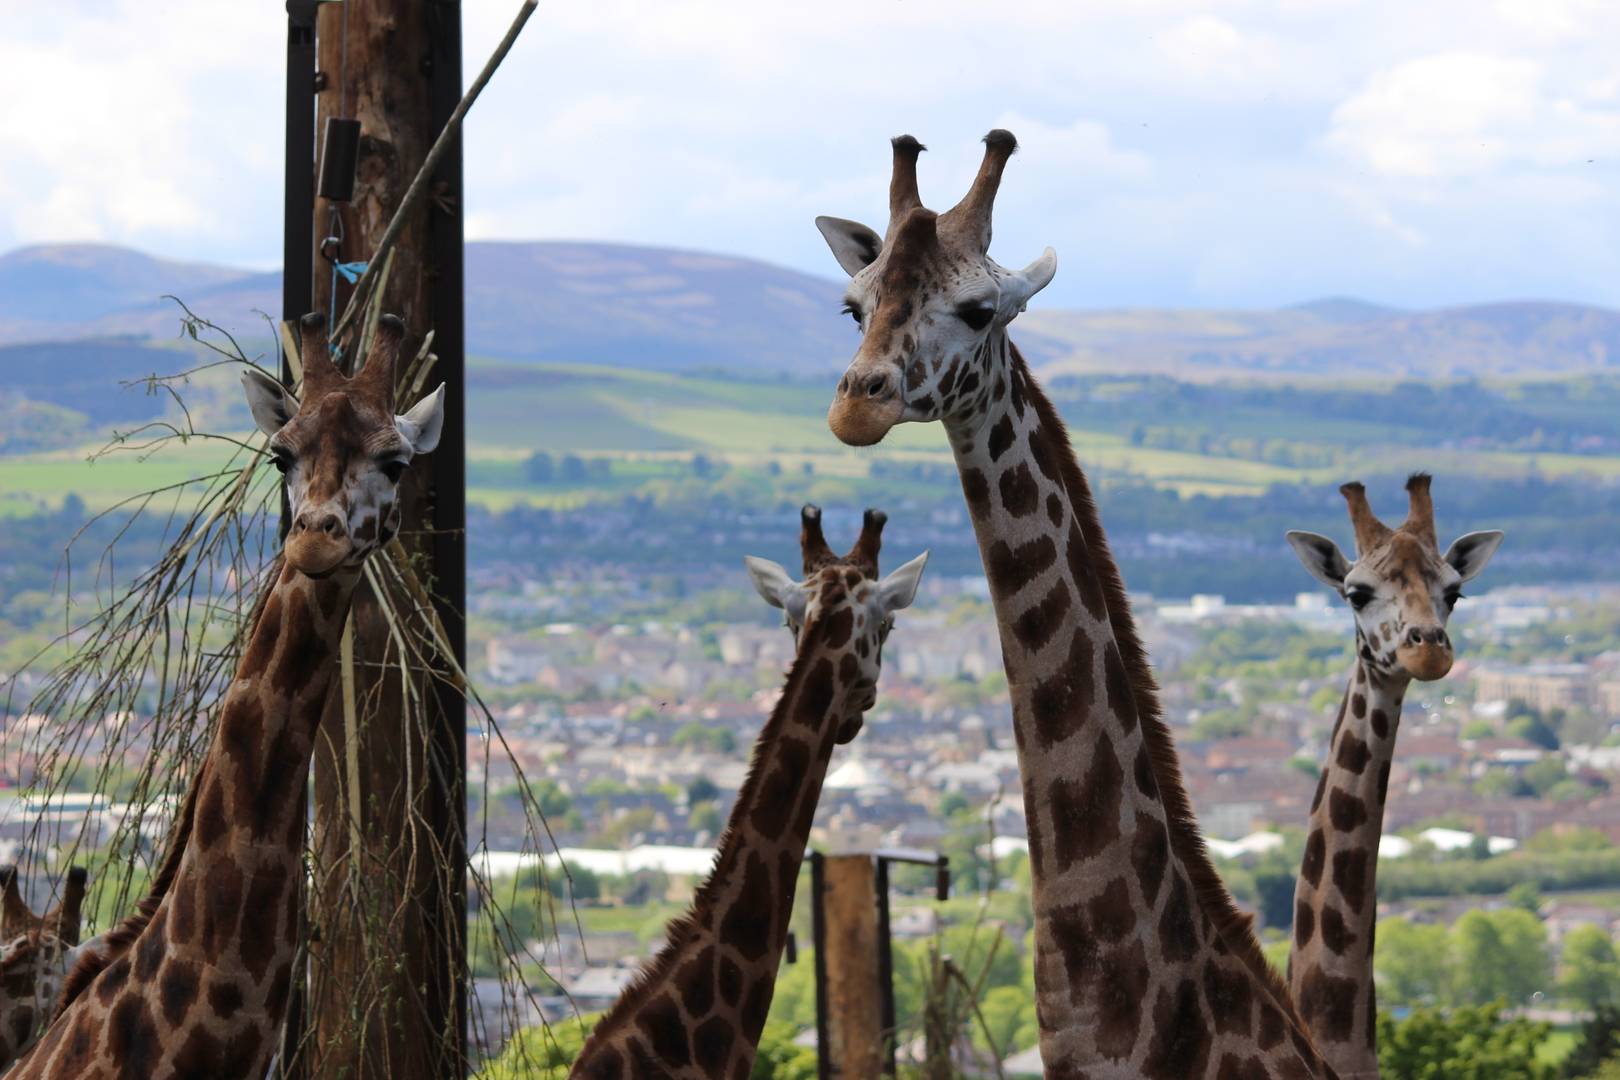 Four giraffes at Edinburgh Zoo, The Royal Zoological Society of Scotland